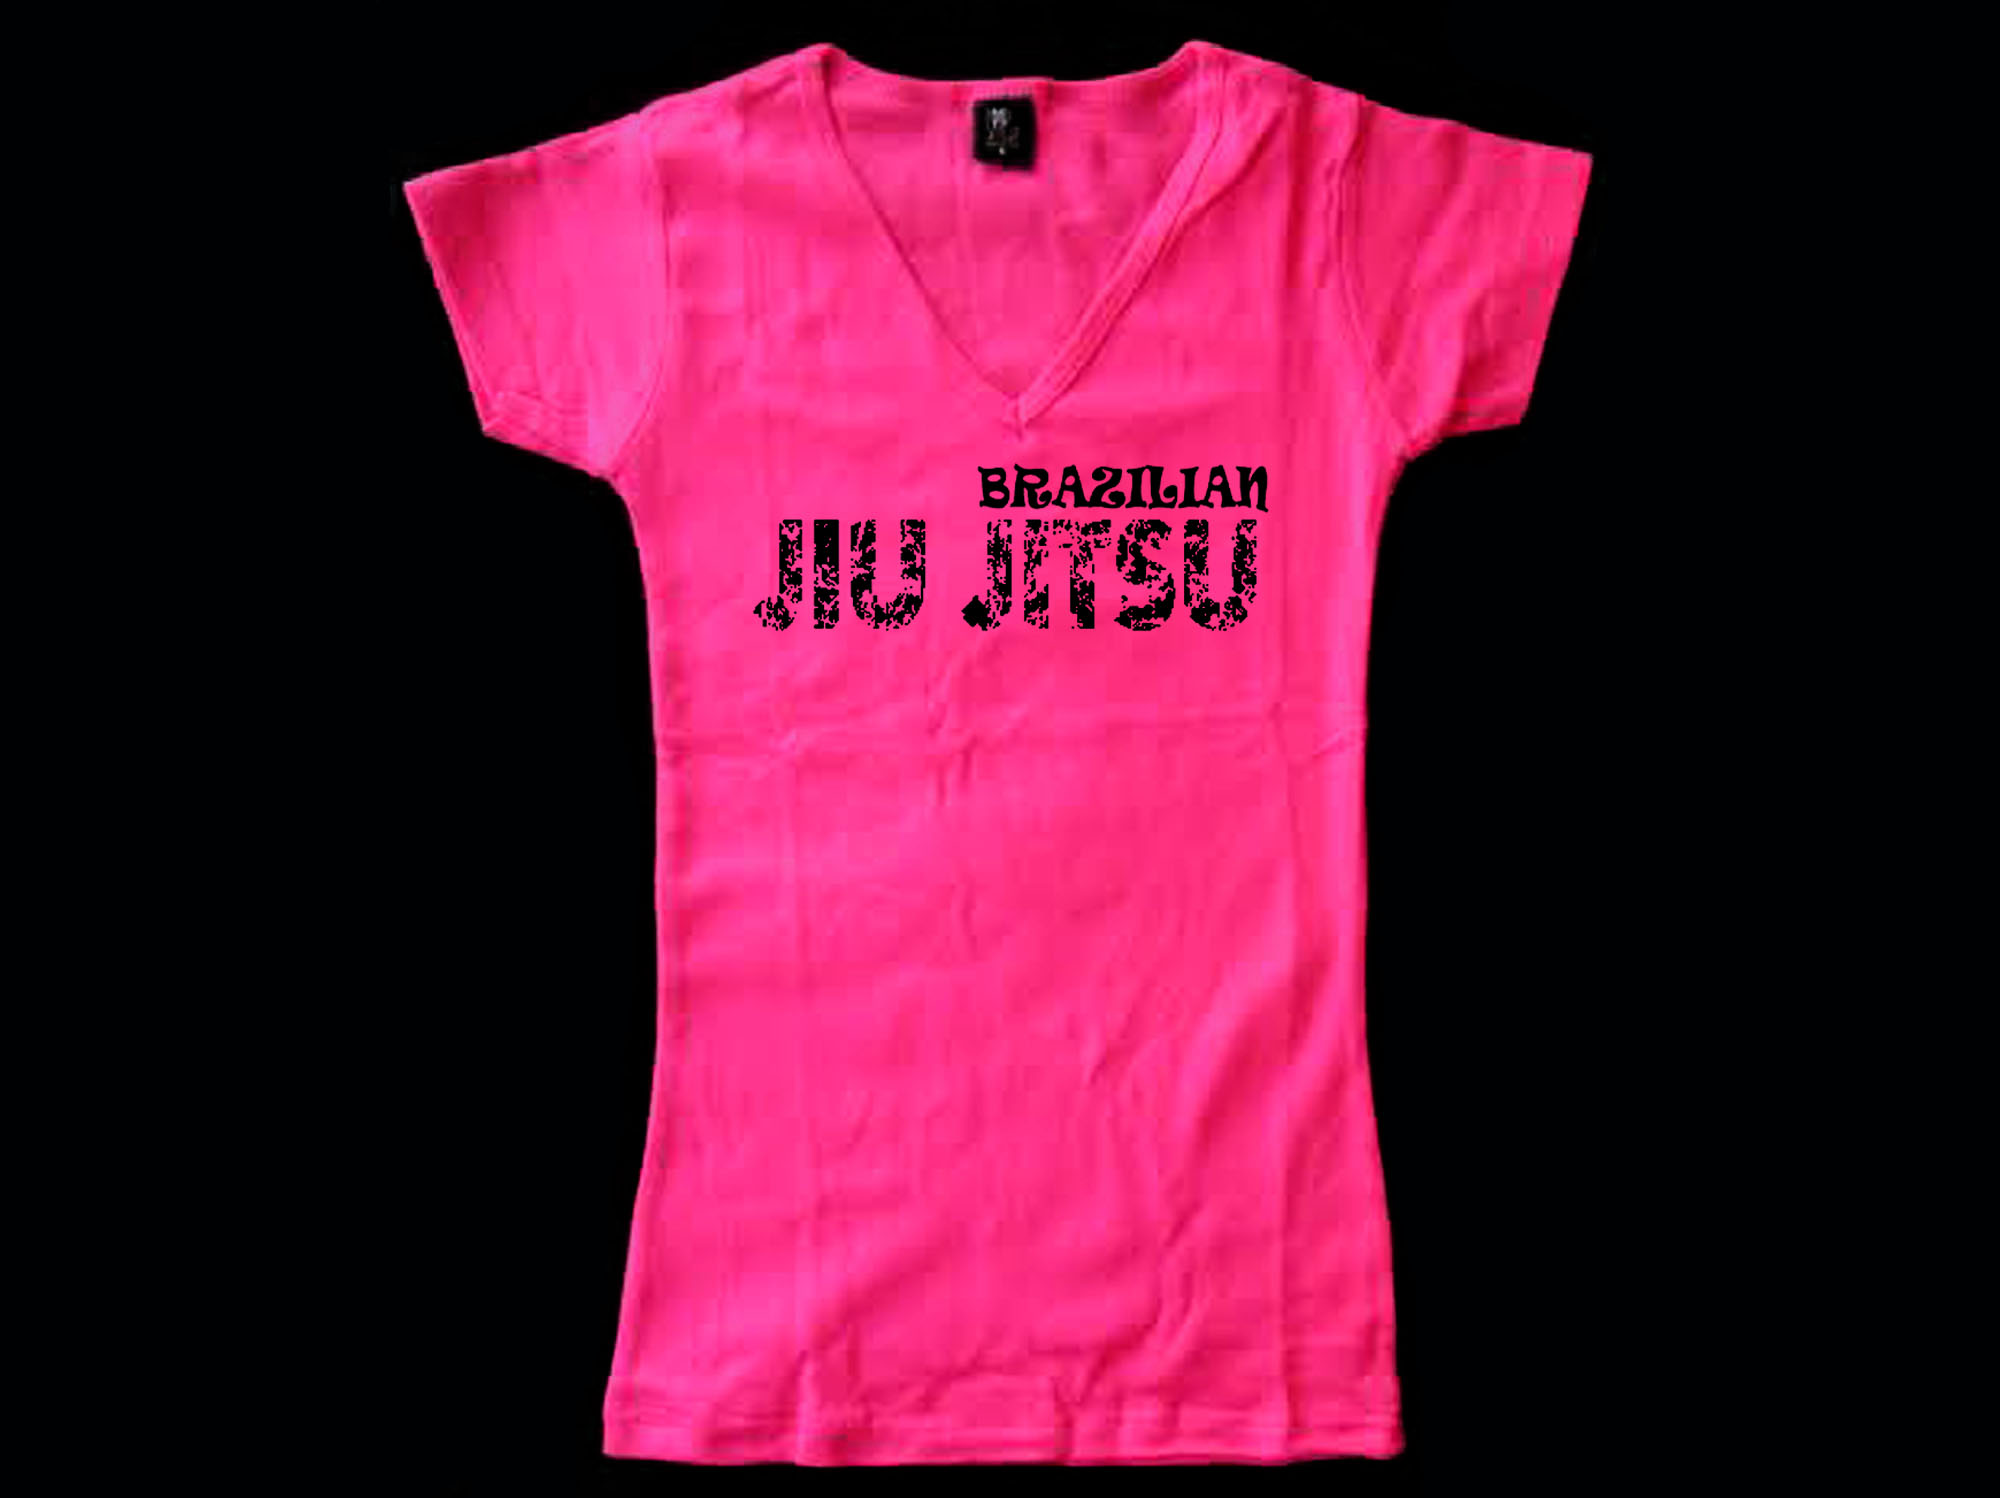 Brazilian jiu jitsu BJJ silk printed ladies/girls pink t-shirt